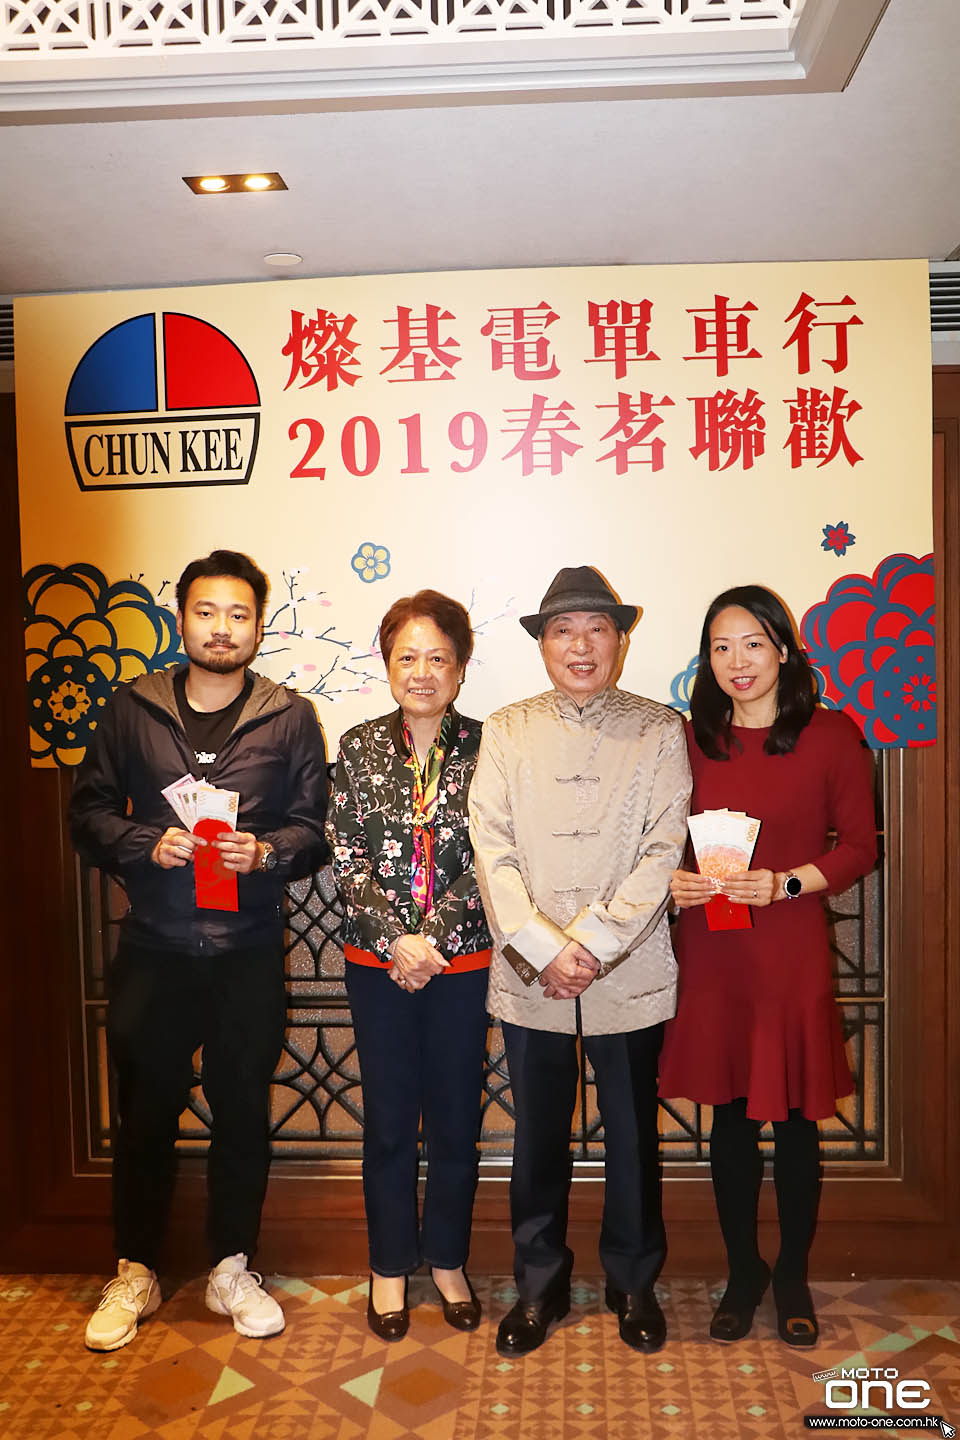 2019 CHUN KEE DINNER